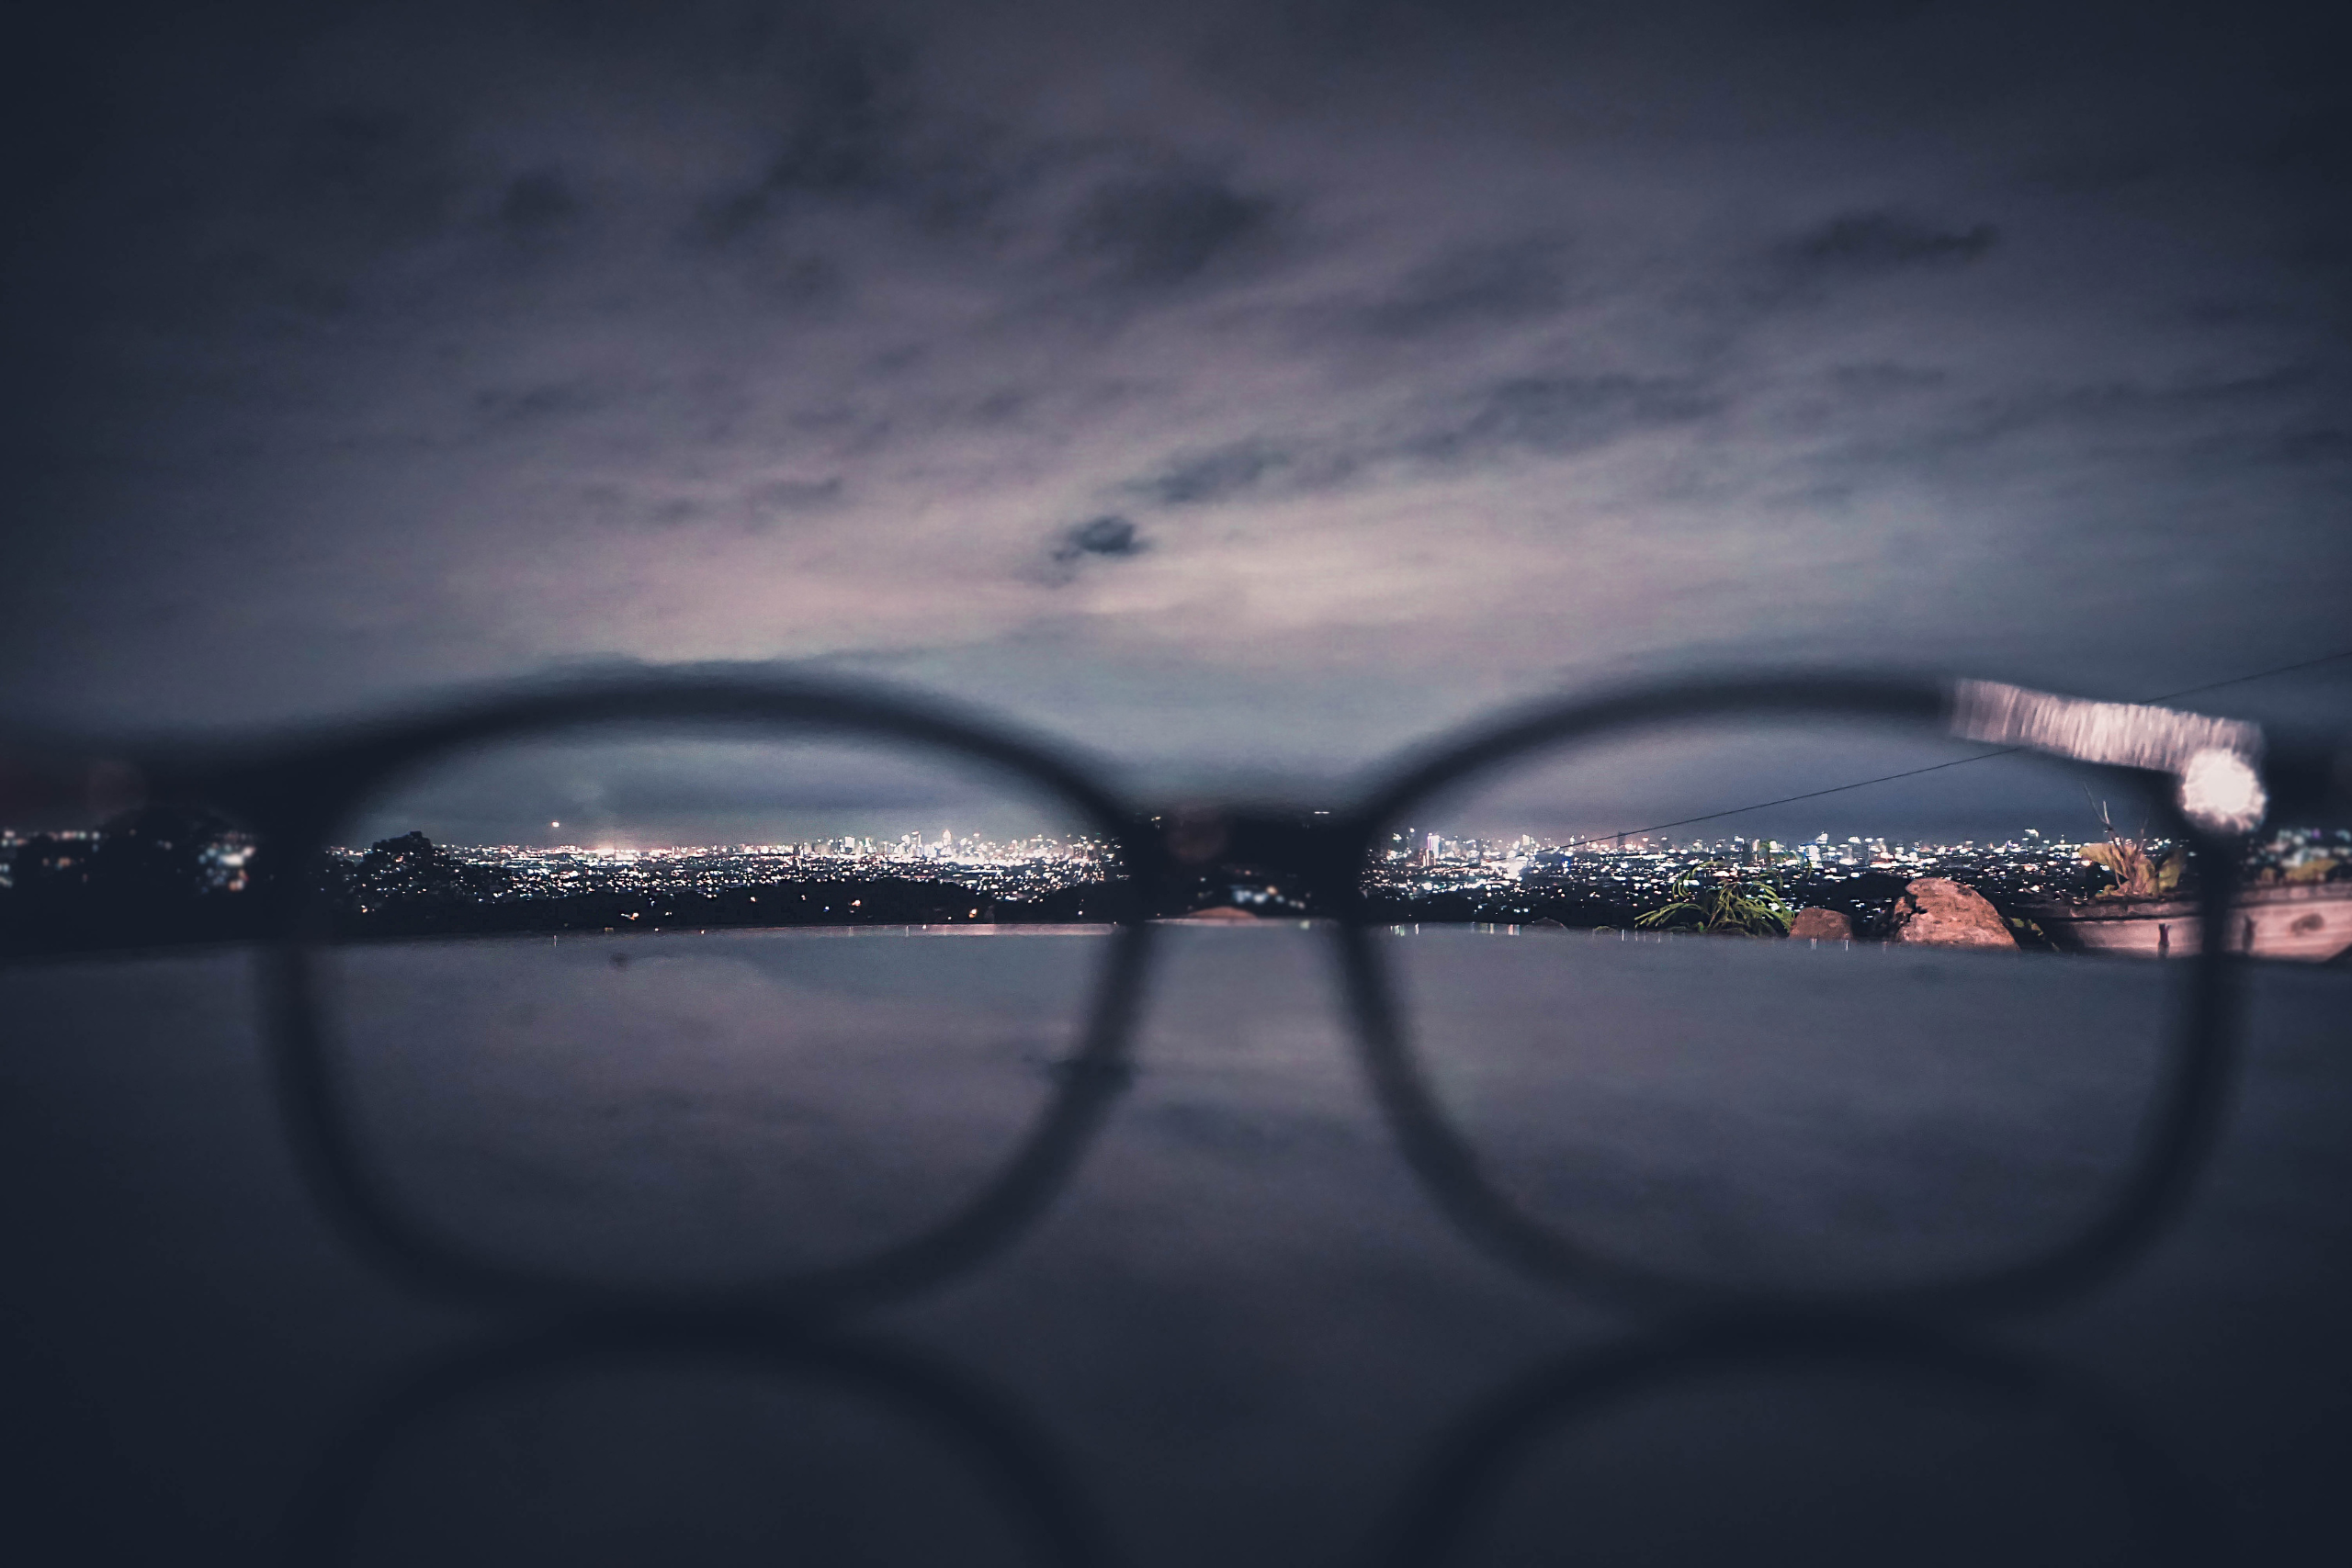 night view through eyeglasses blurred